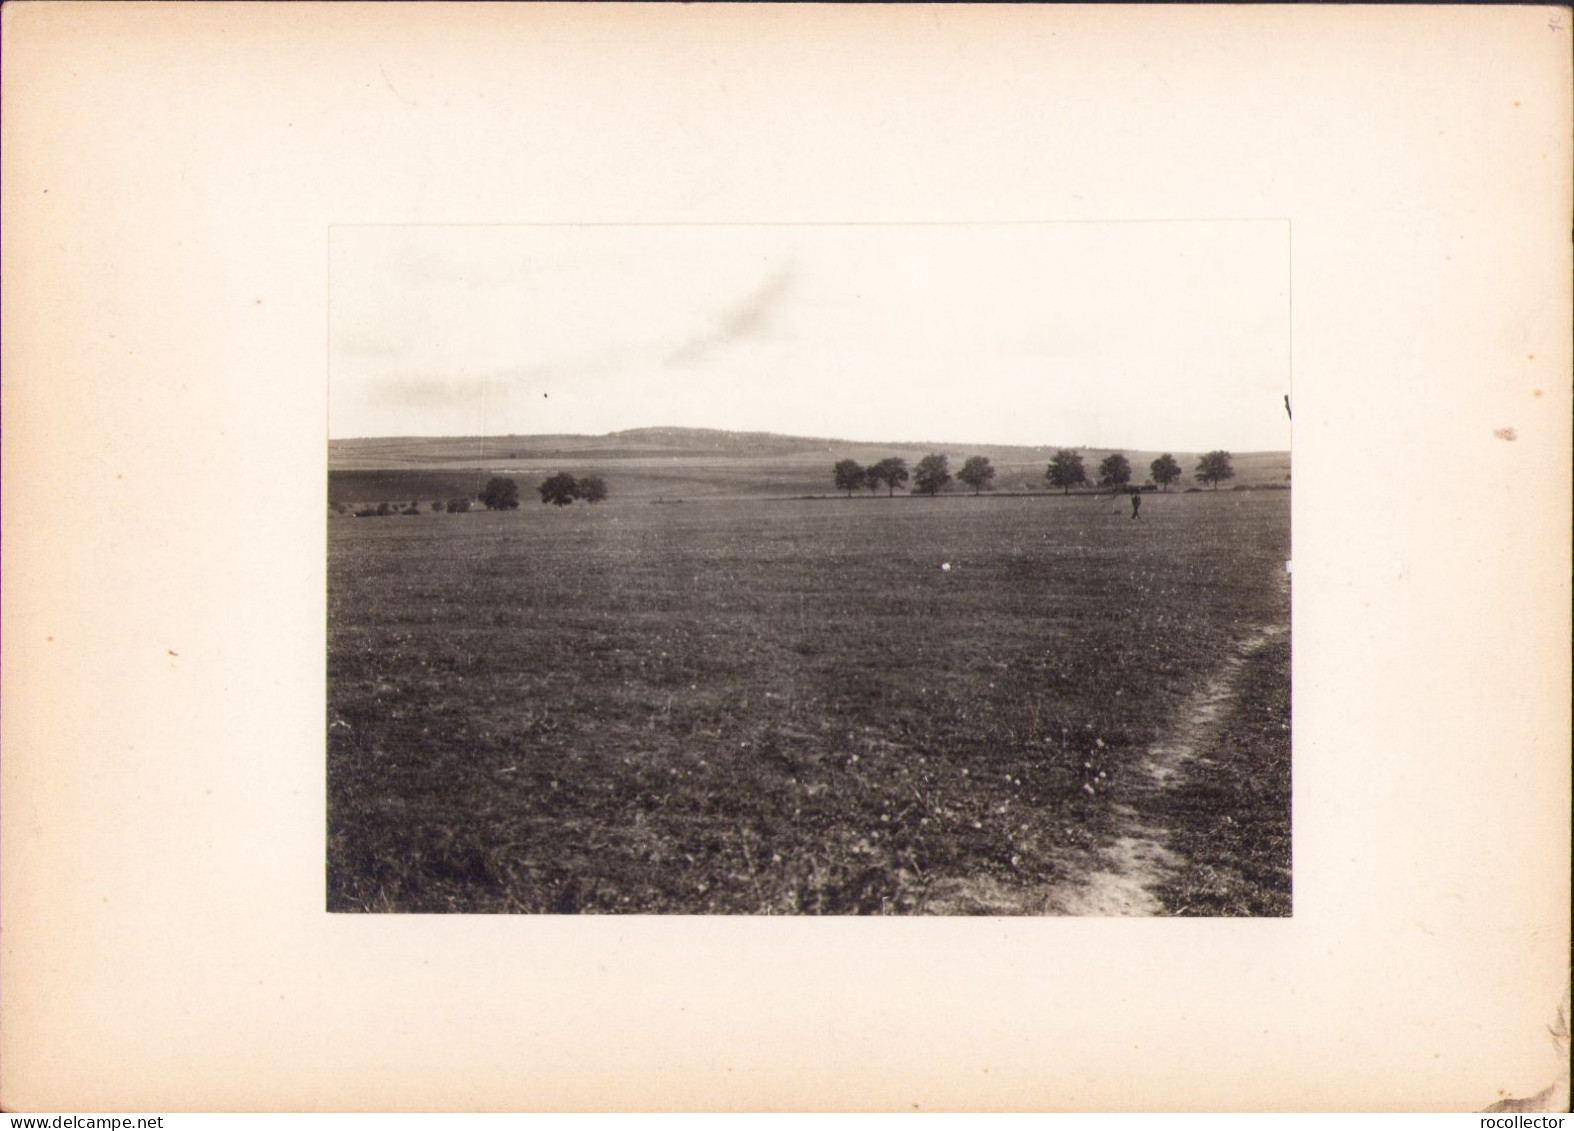 Vedere Spre Dealul Silagiului Buziaș, 1921, Fotografie De George Vâlsan  G111N - Plaatsen